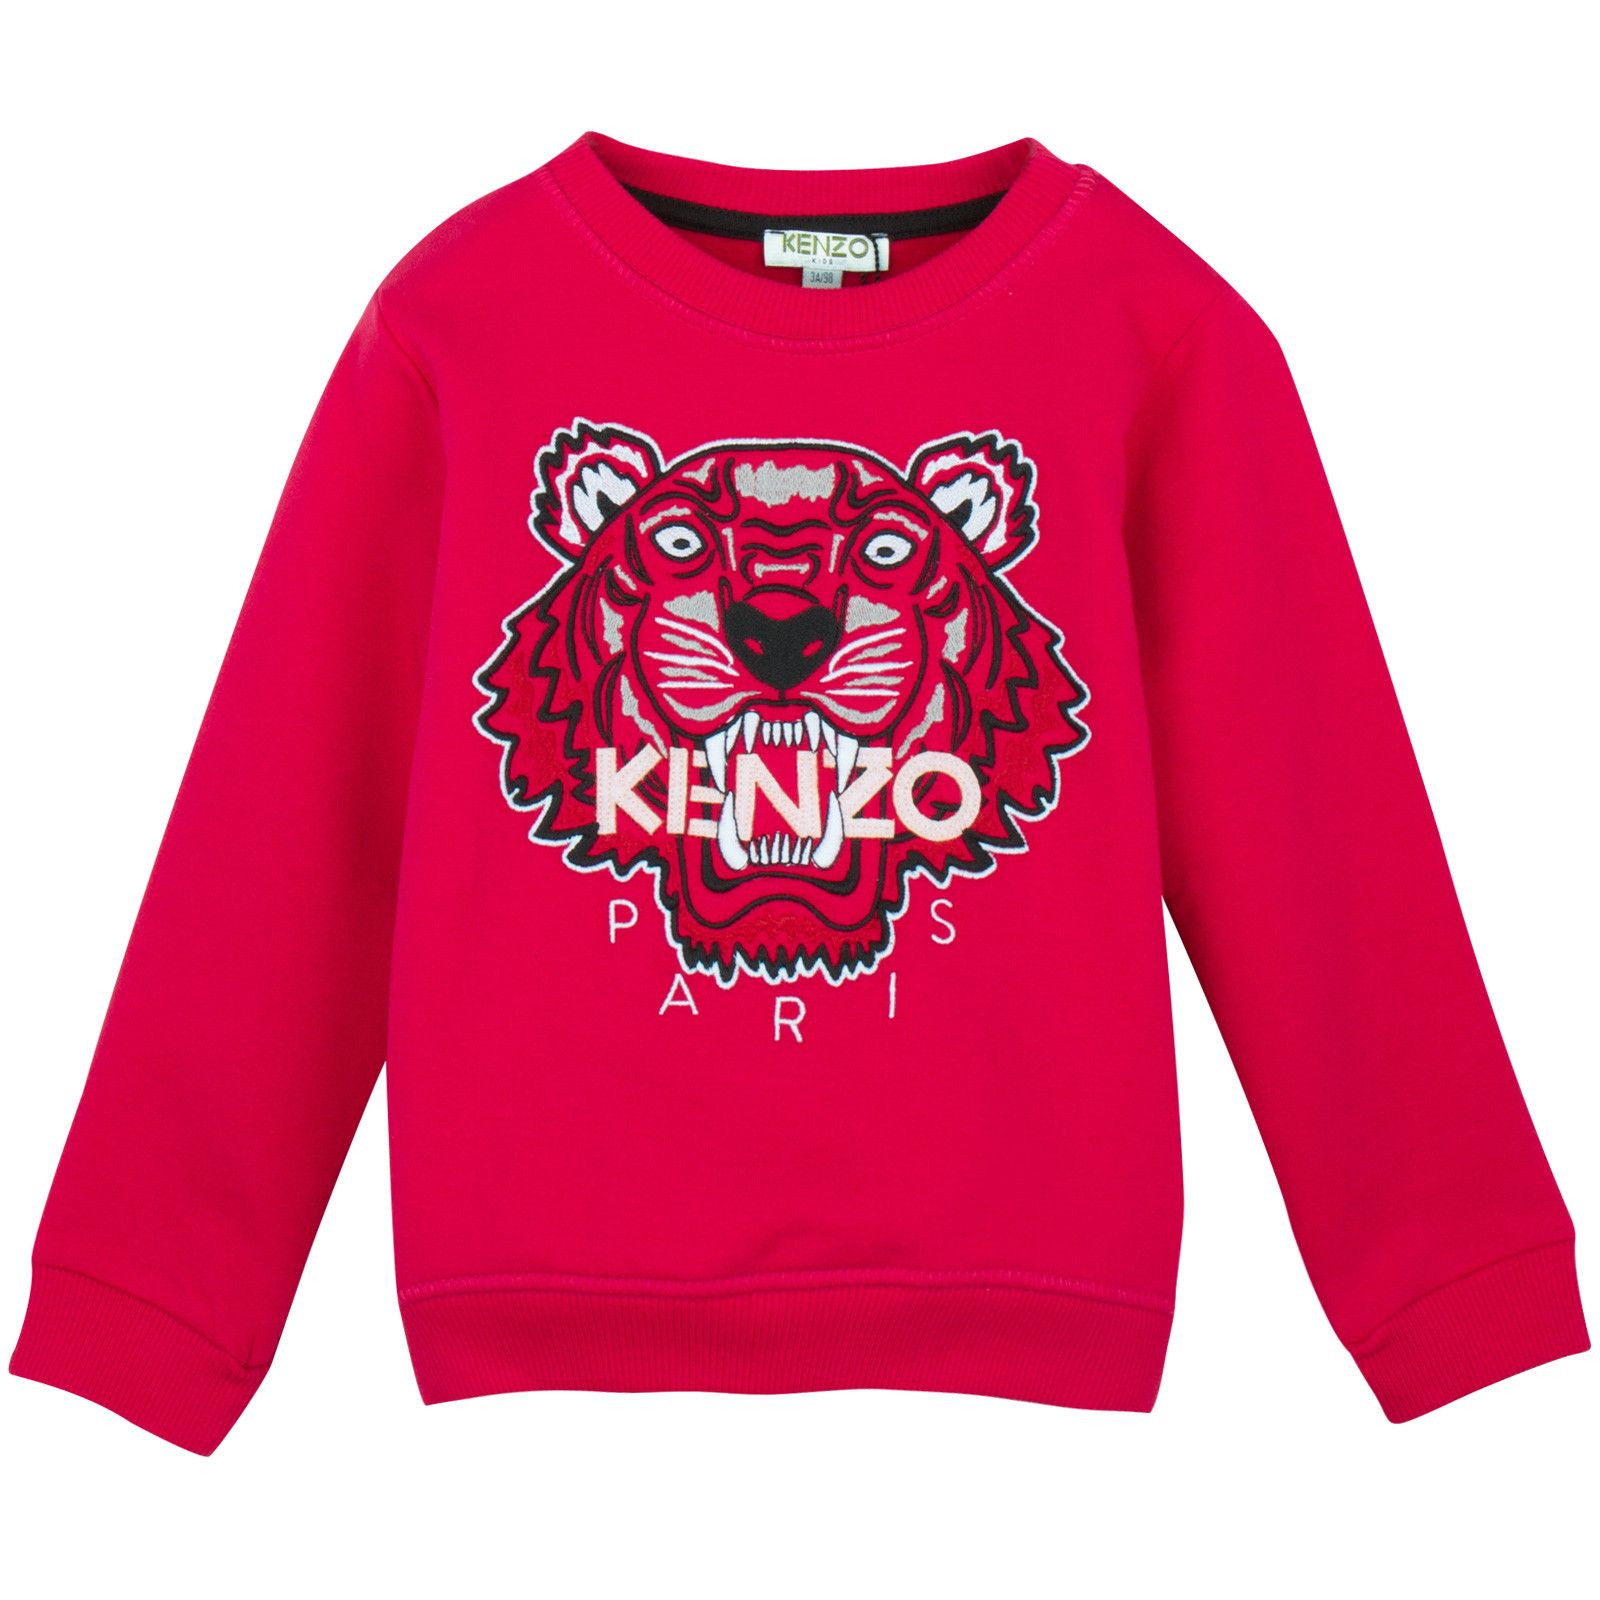 Boys Red Tiger Embroidered Sweatshirt - CÉMAROSE | Children's Fashion Store - 1